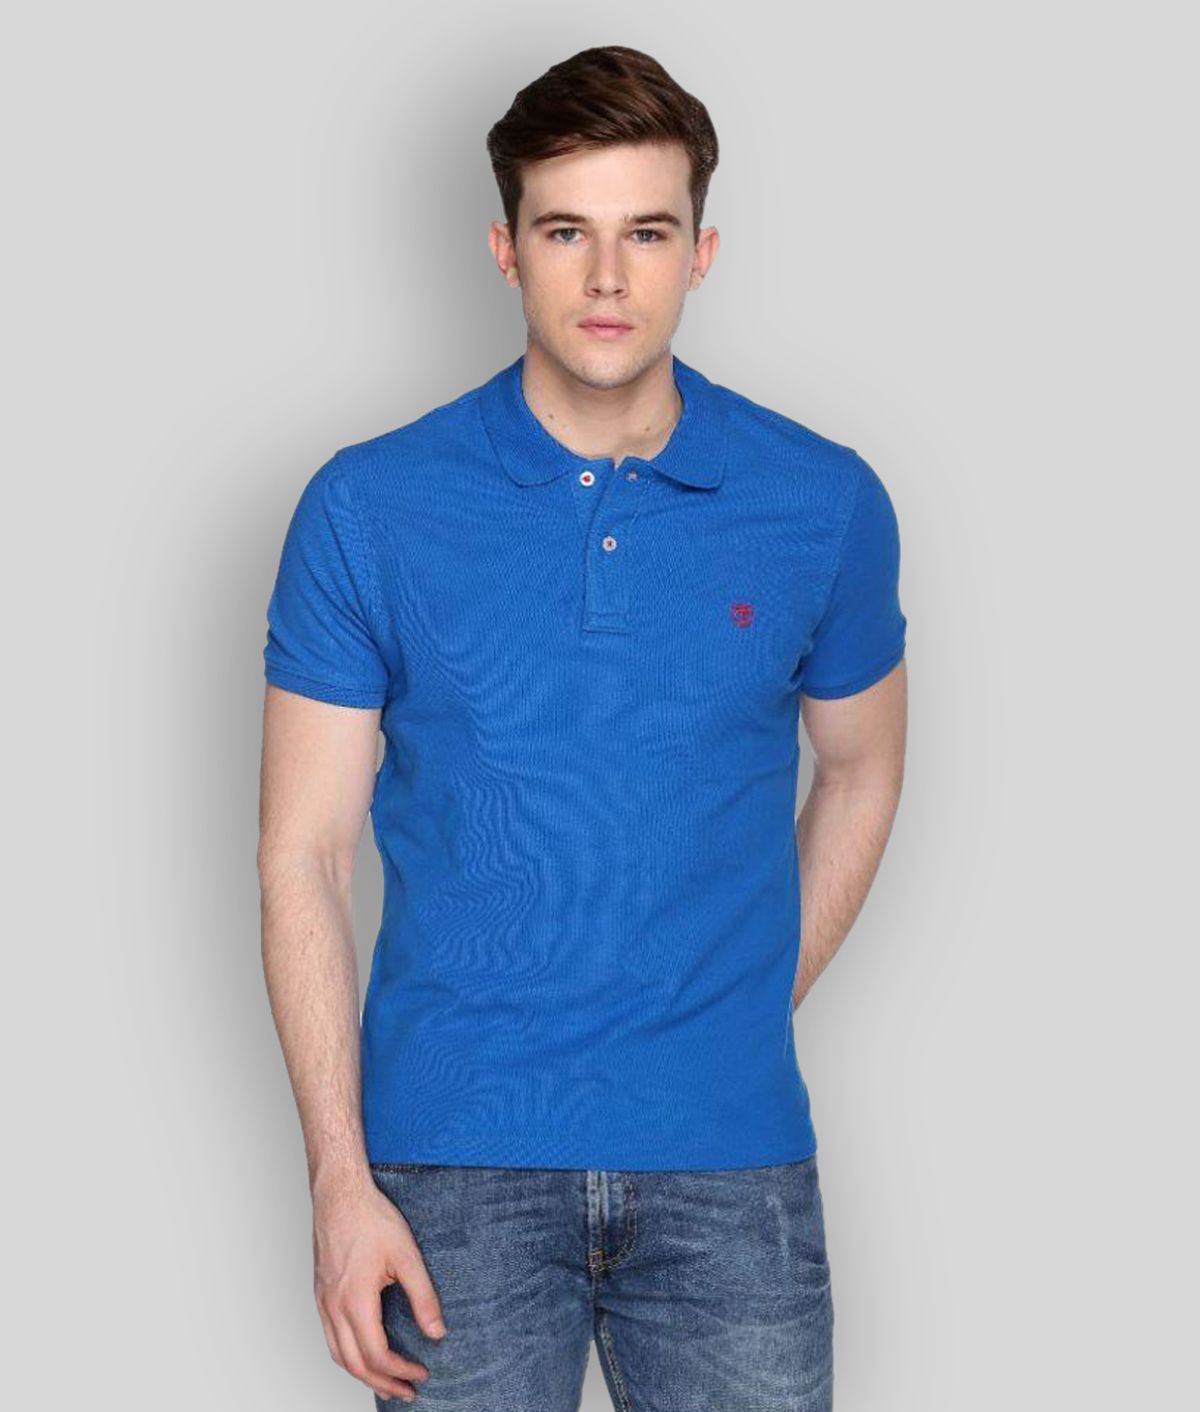 Trufit - Blue Cotton Regular Fit Men's Polo T shirt ( Pack of 1 )